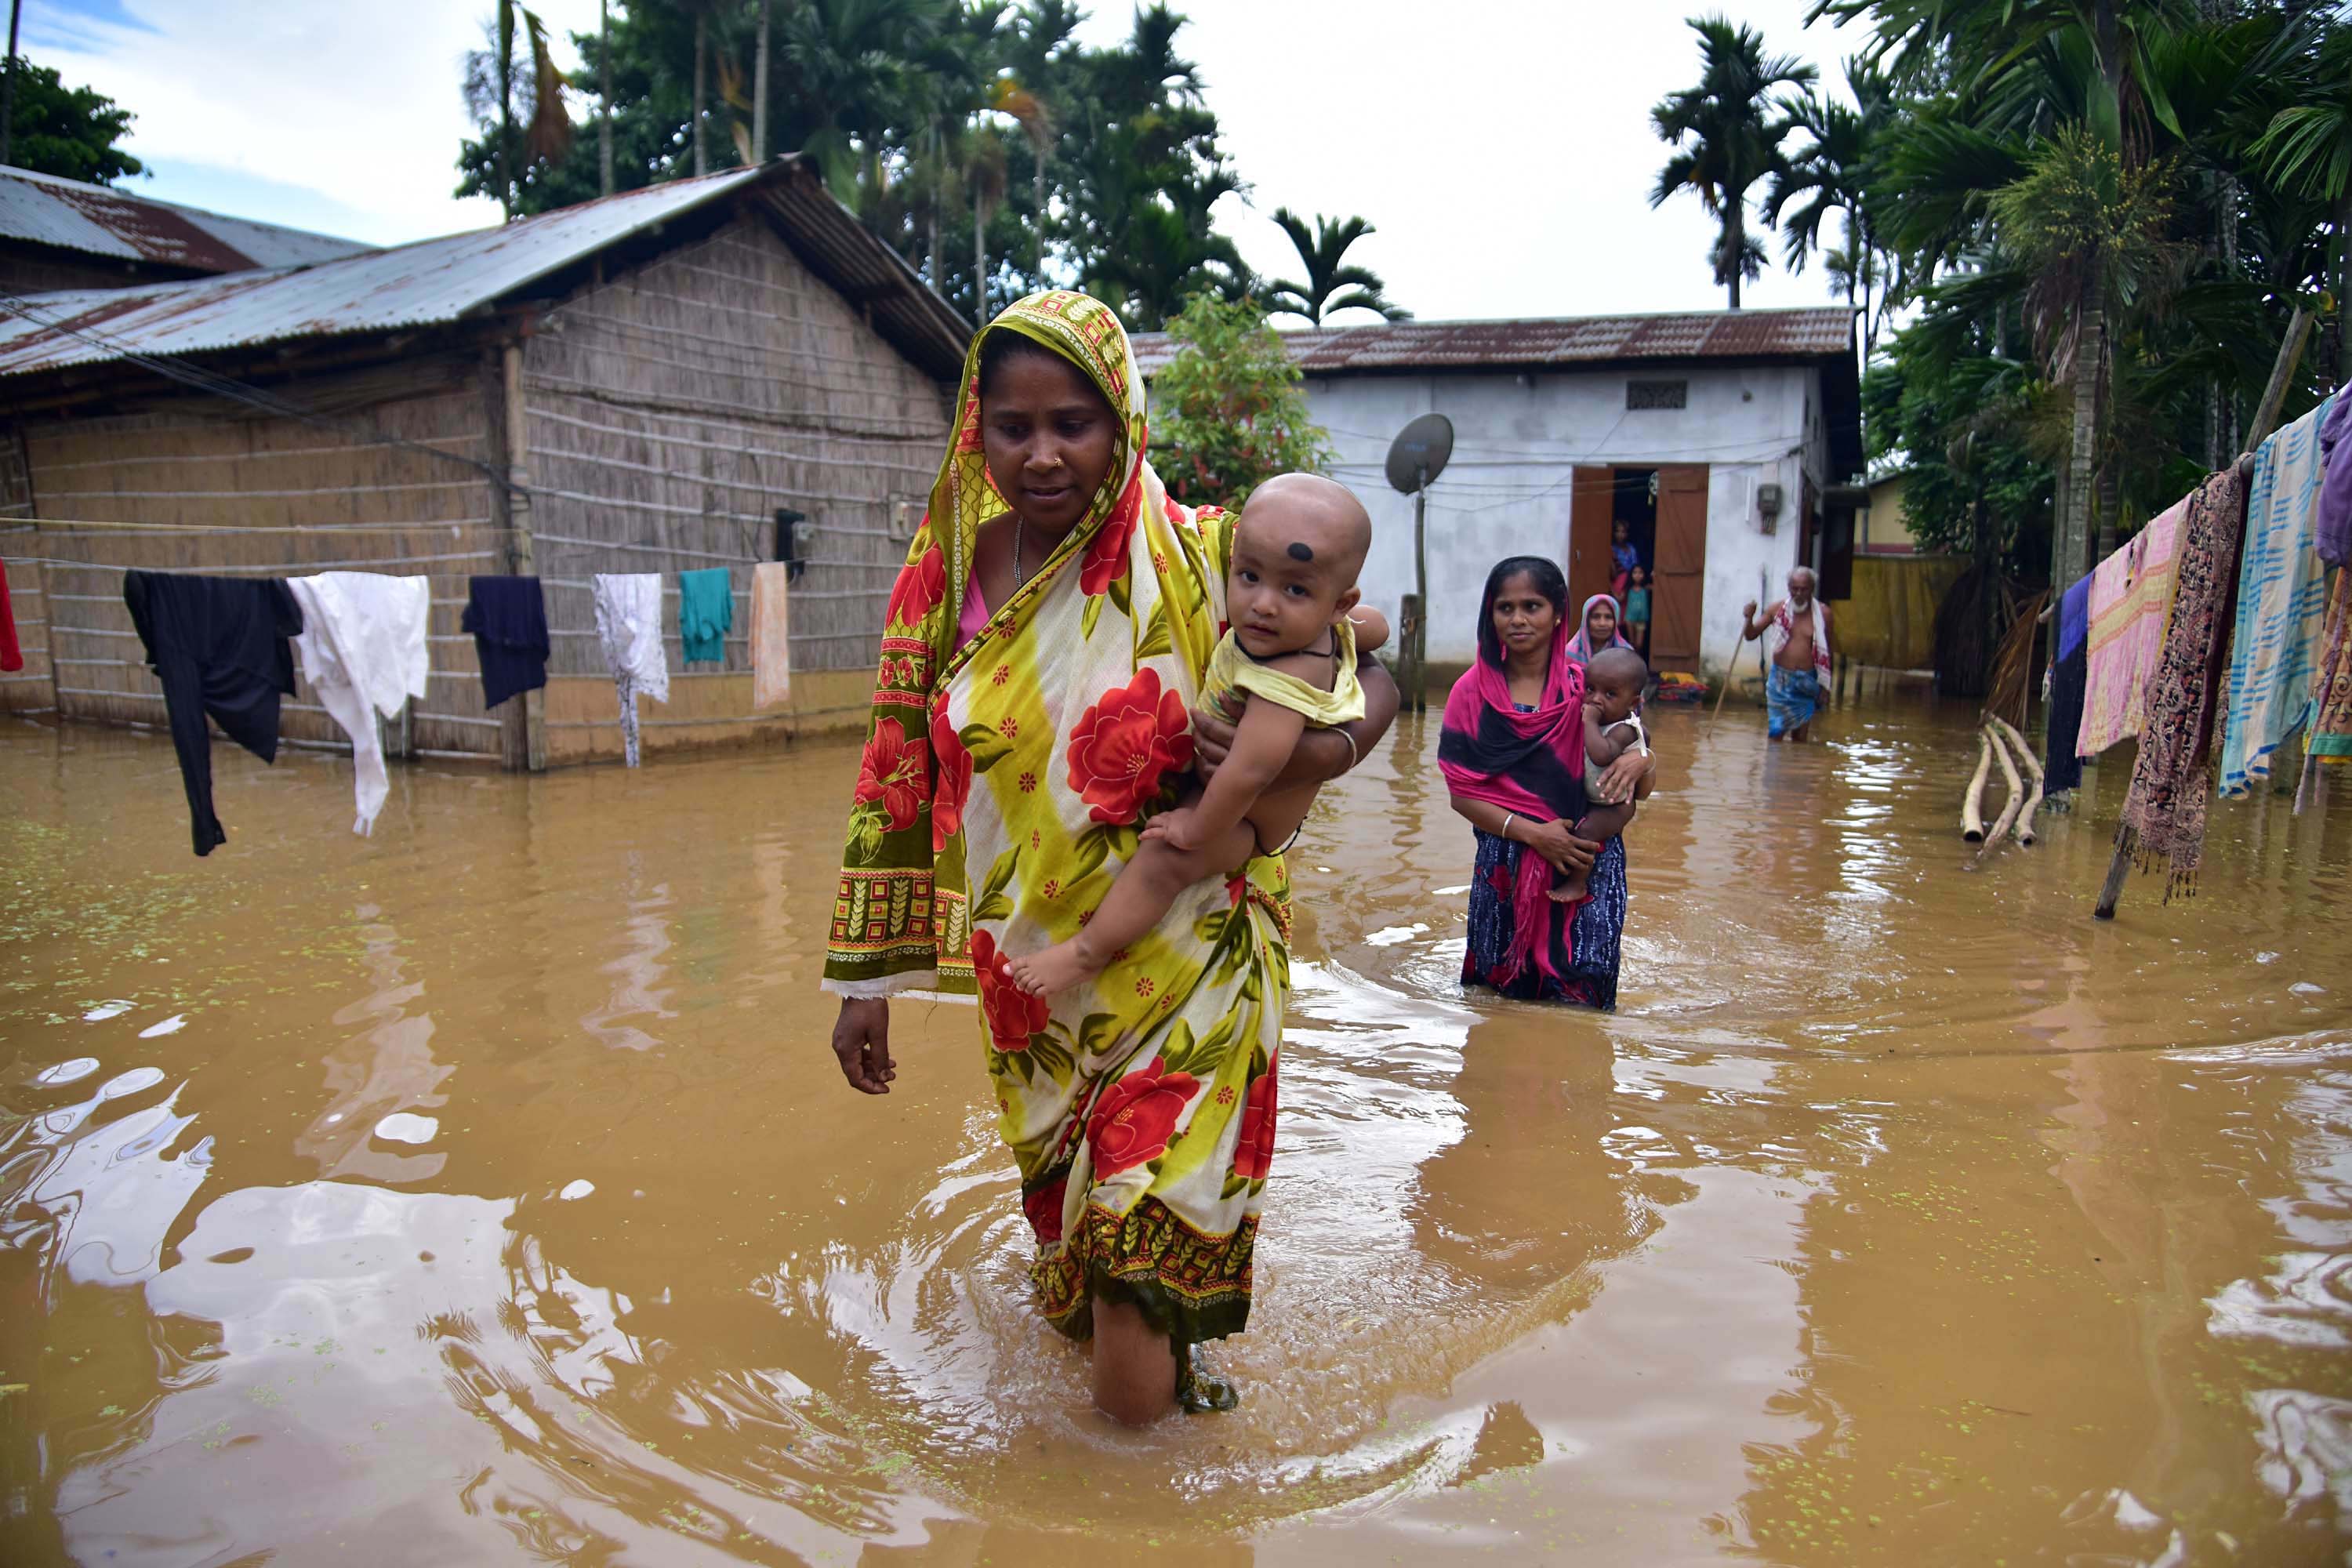 Assam floods claim 89 lives, affect 26 districts: ASDMA